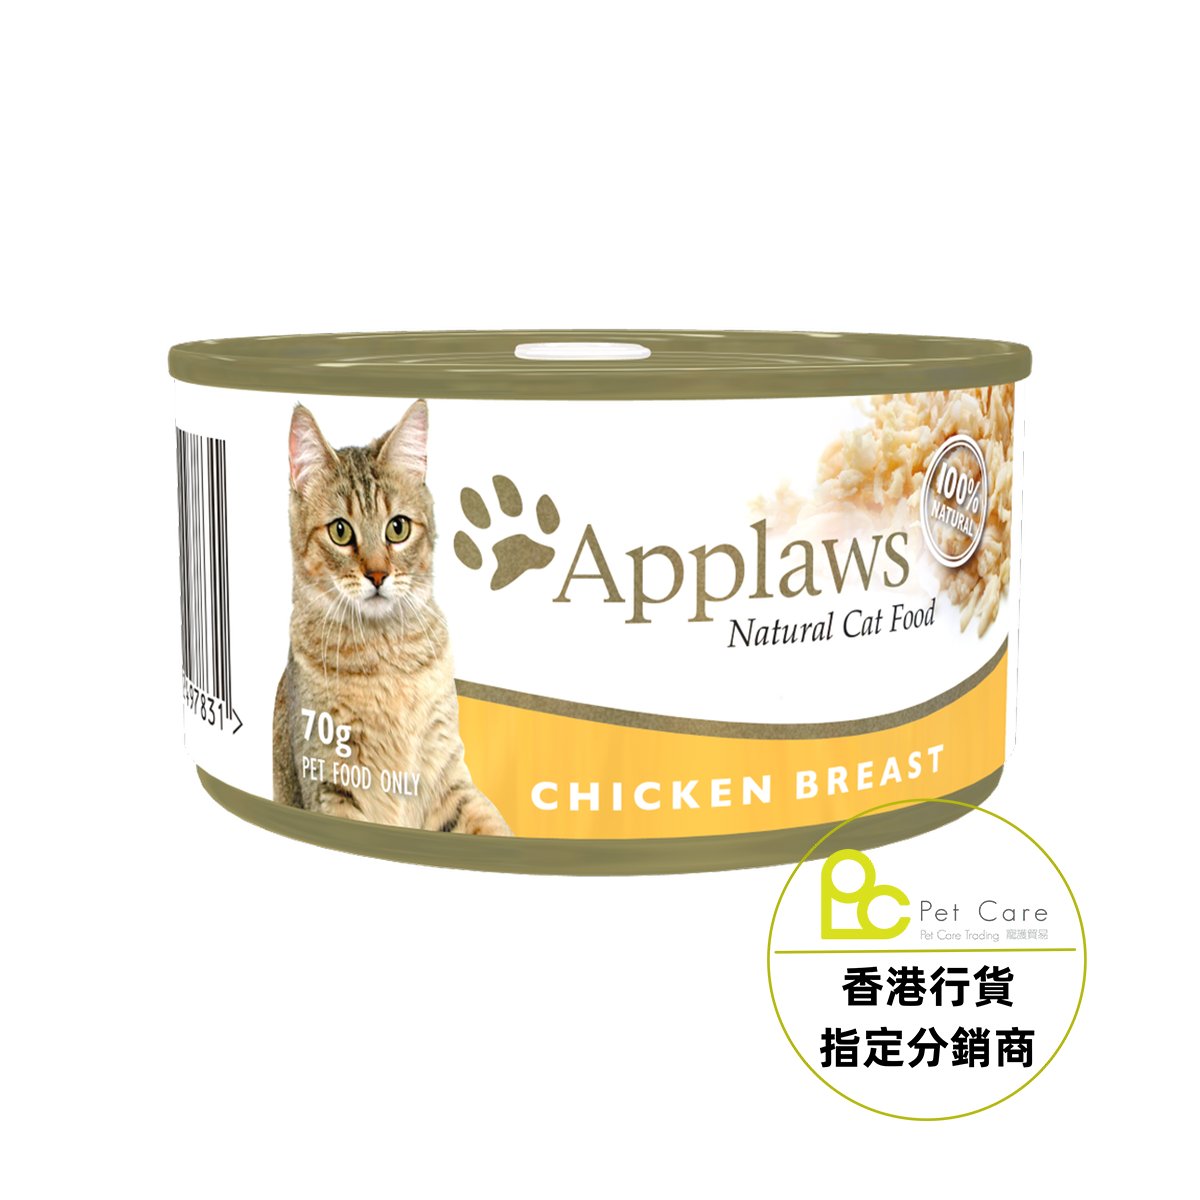 Applaws 全天然 貓罐頭 - 雞胸 70g (細)